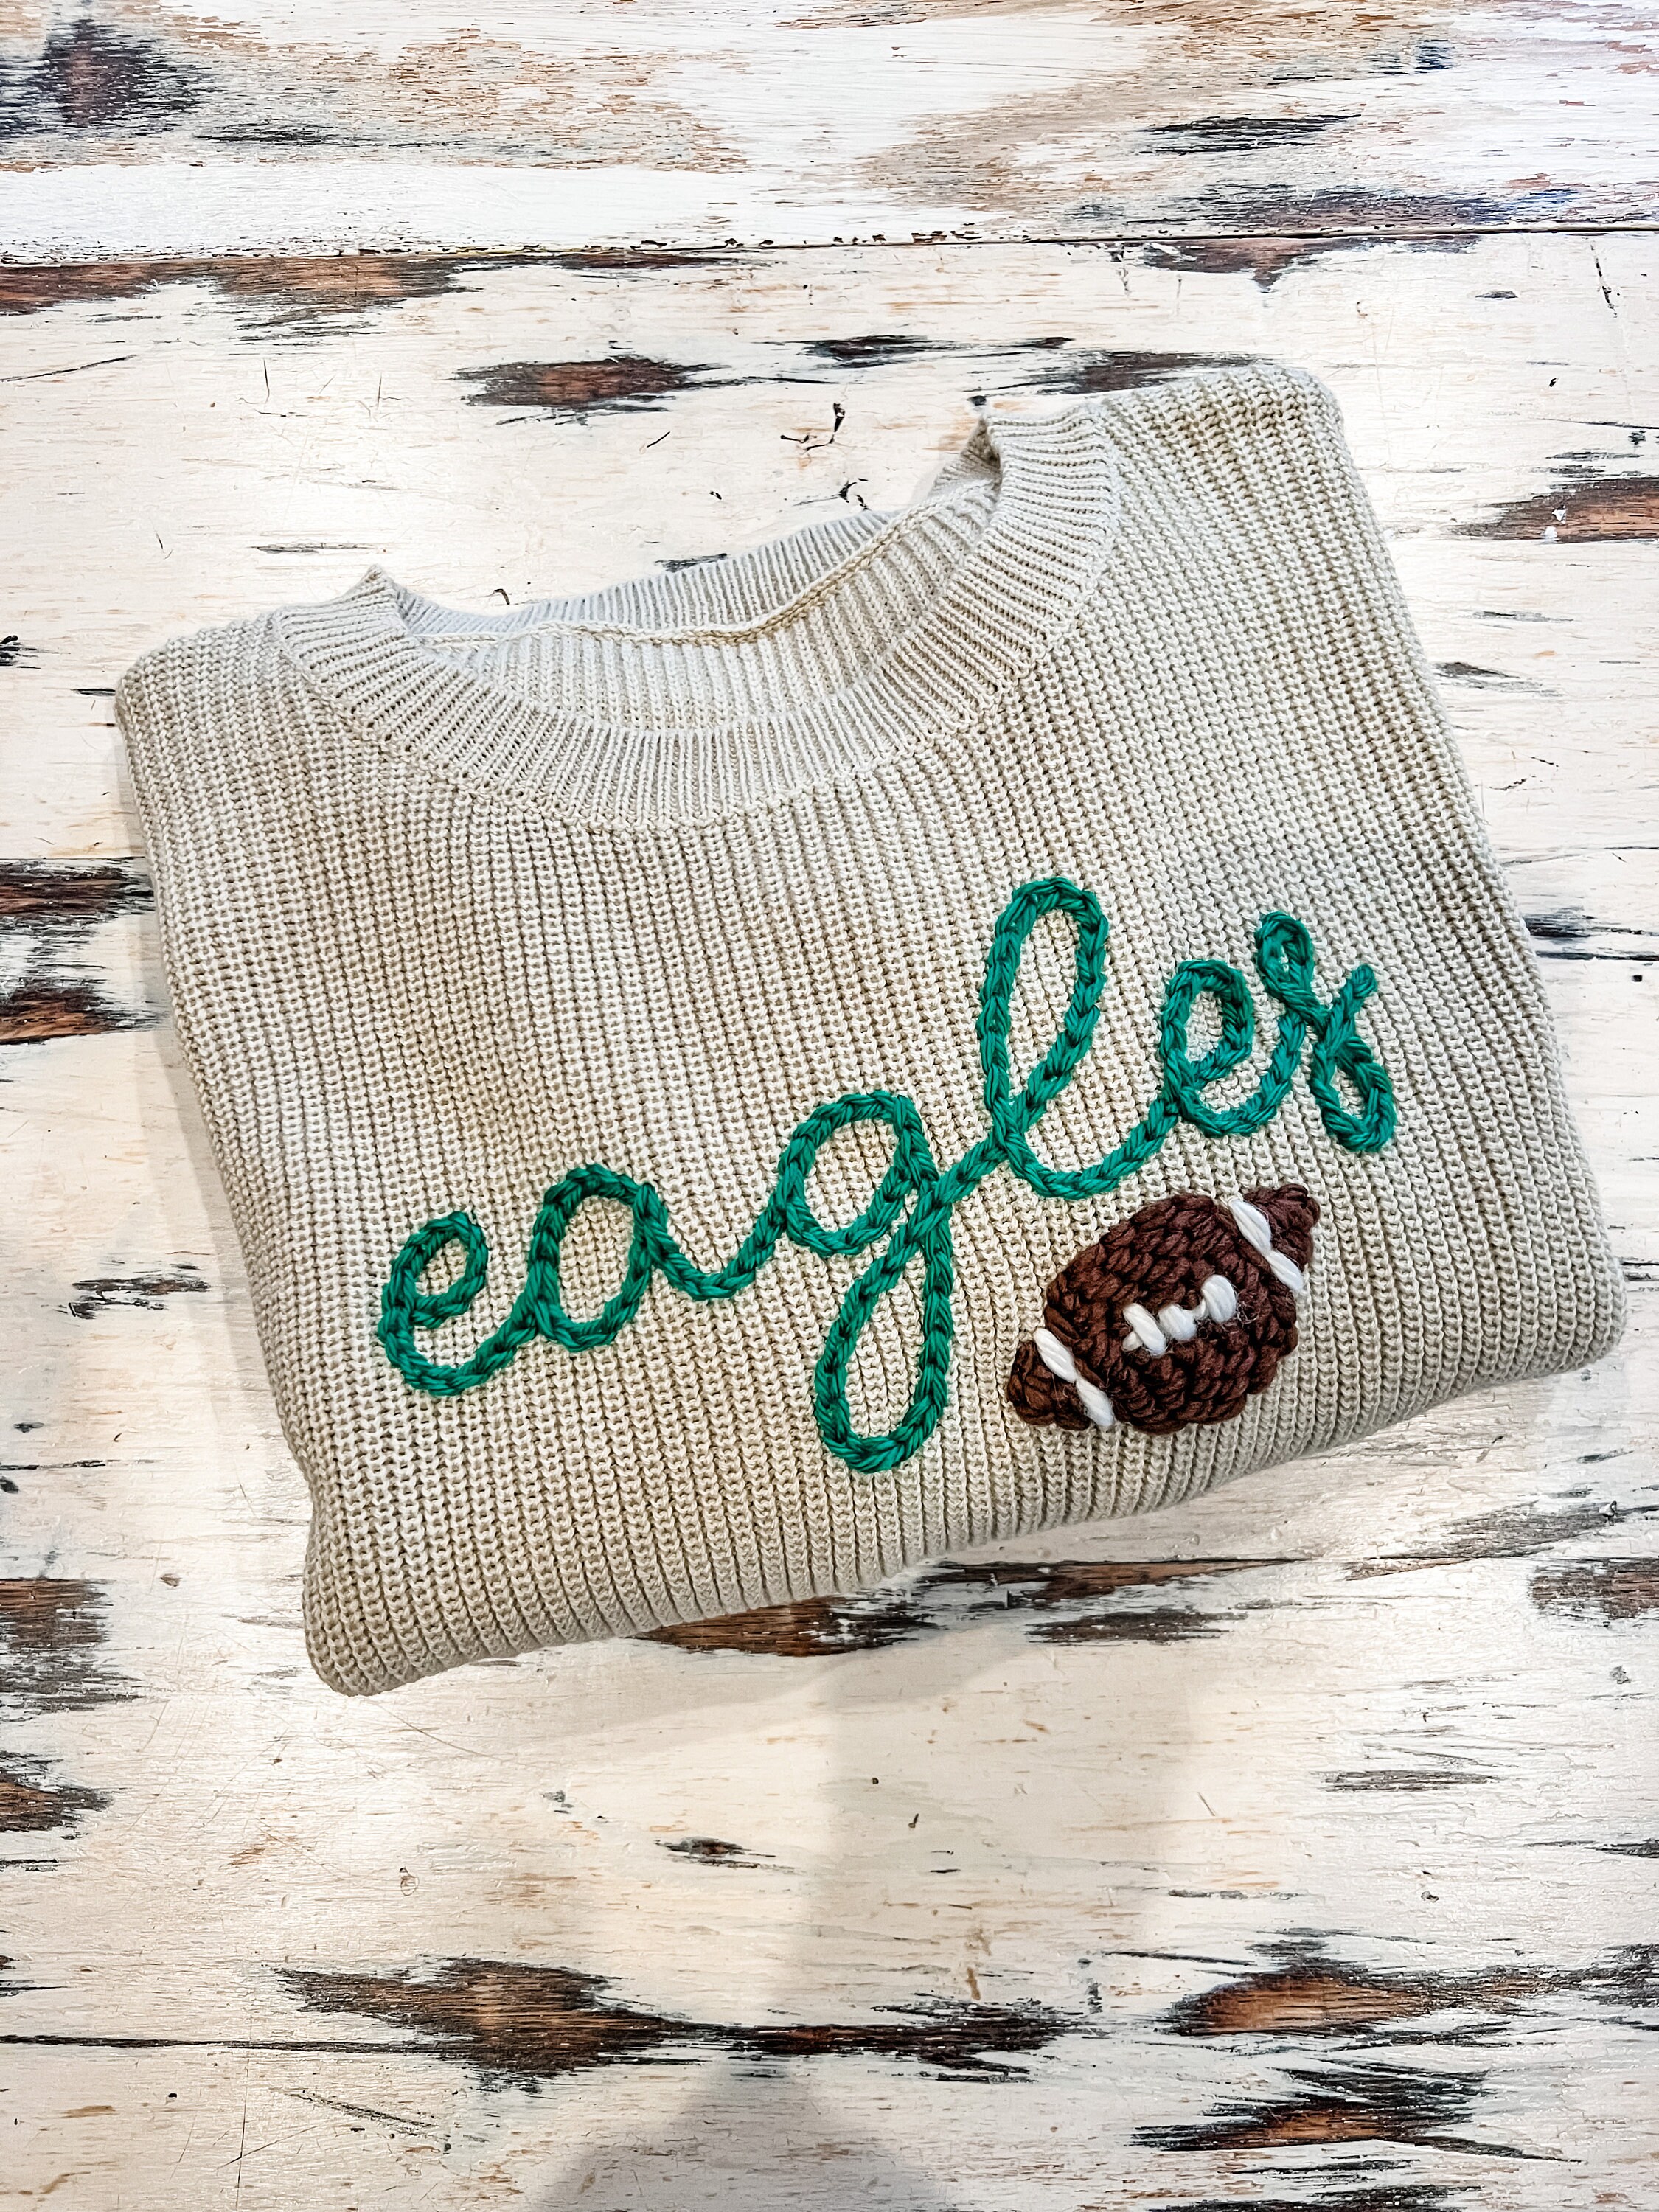 Vintage 70s Philadelphia Eagles Hoodie Sweatshirt Size XL (23x25) Football  USA